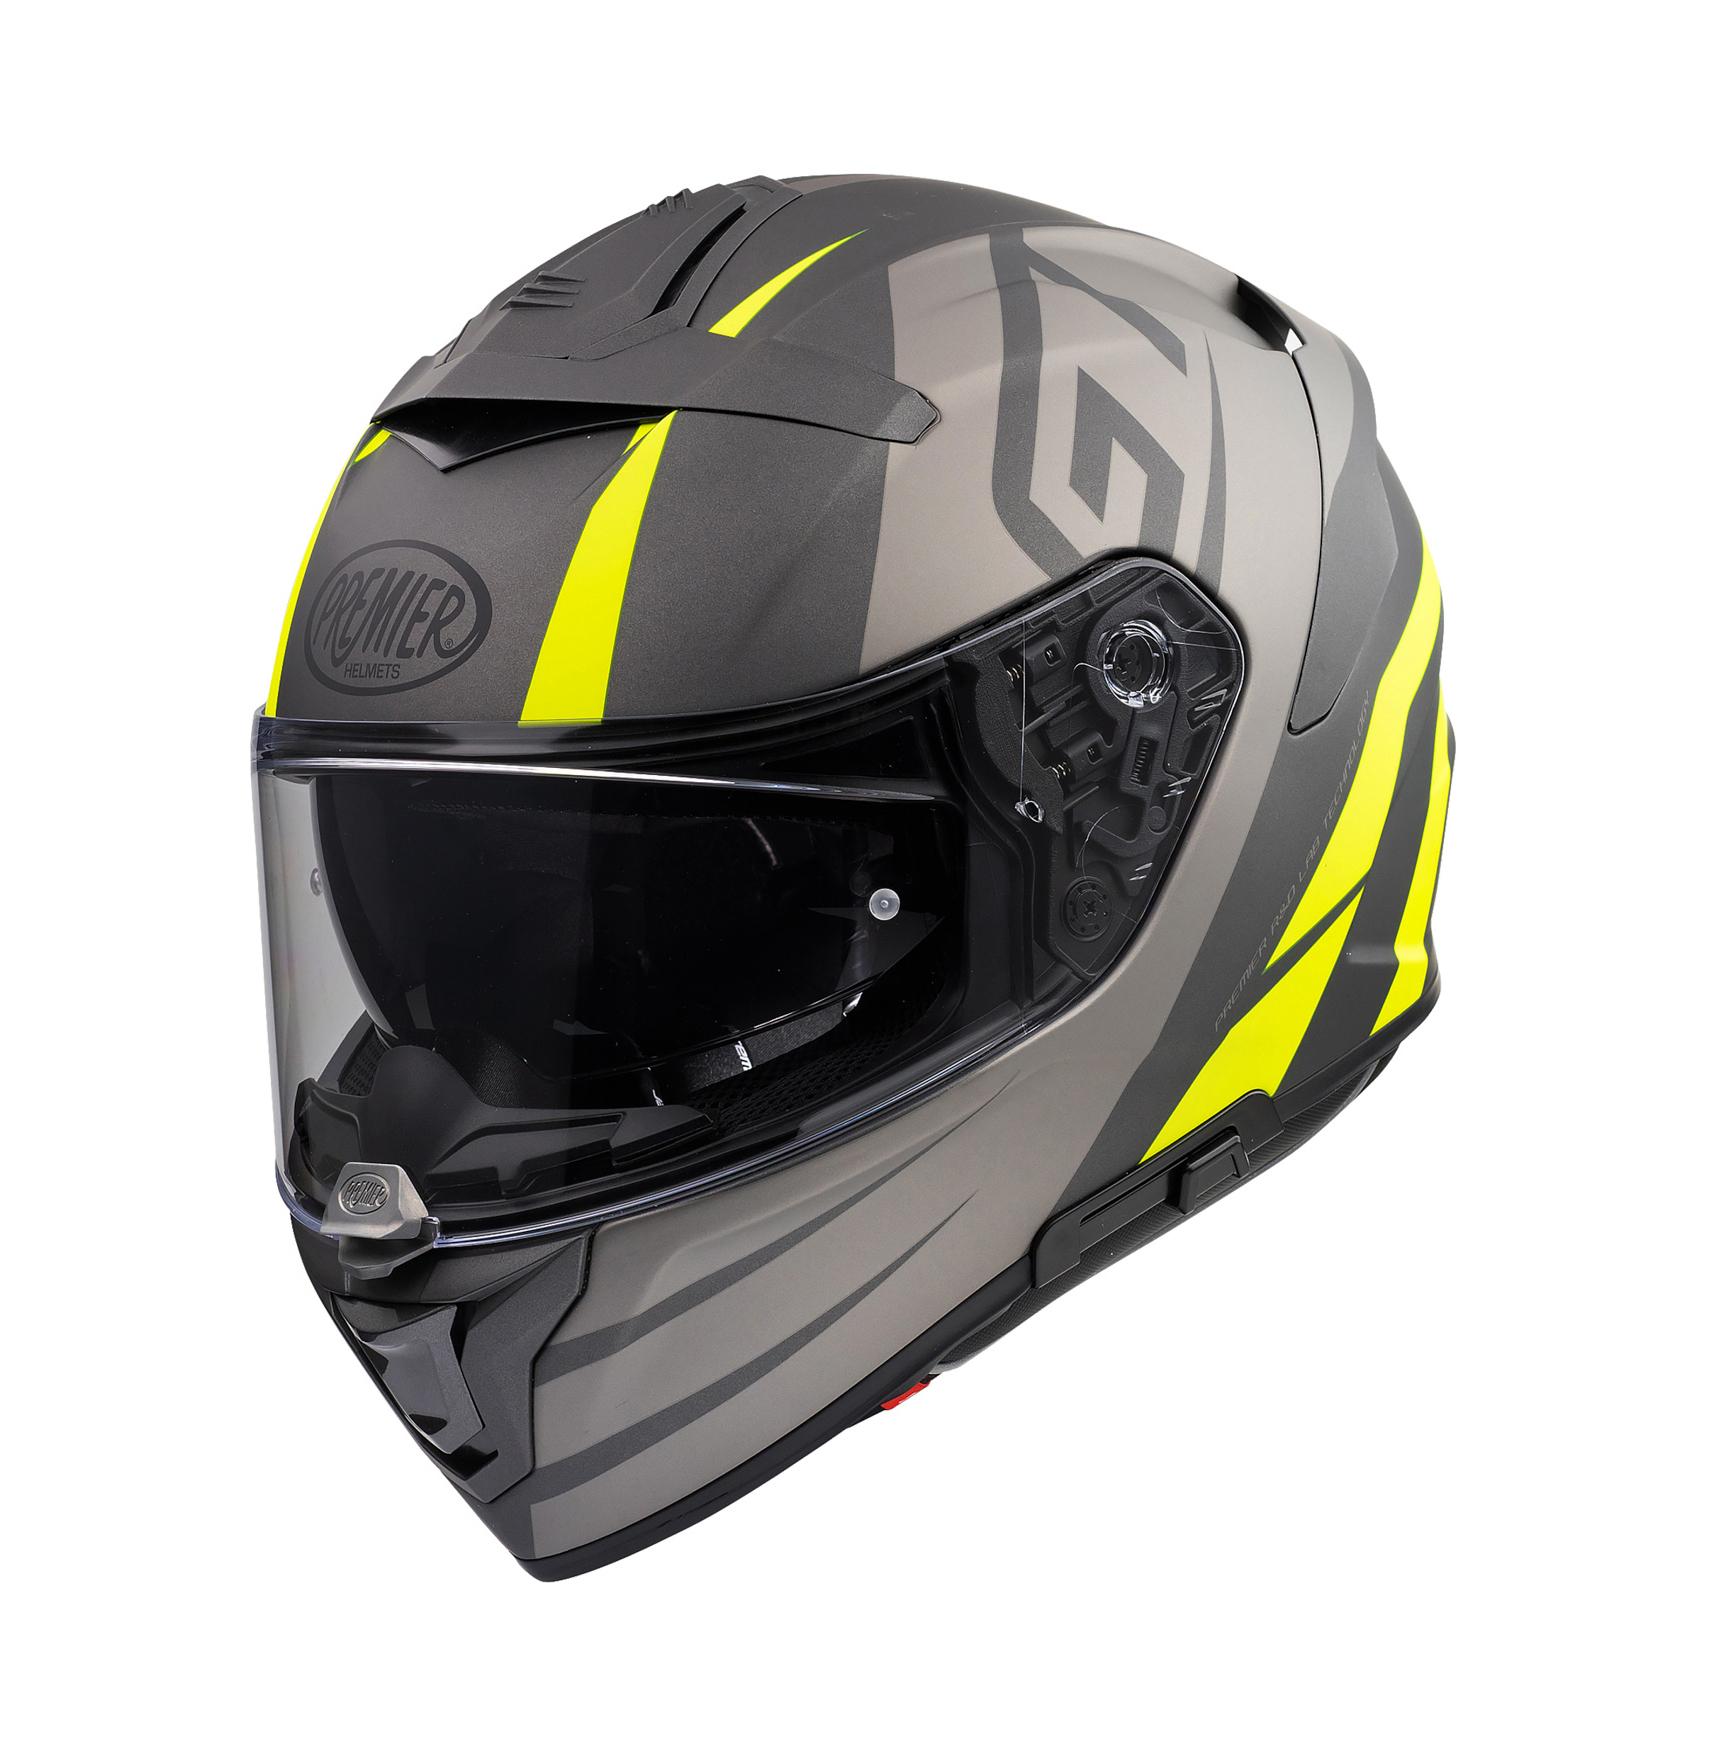 Premier Devil Gt Full Face Motorcycle Helmet - Black/Neon, Xl